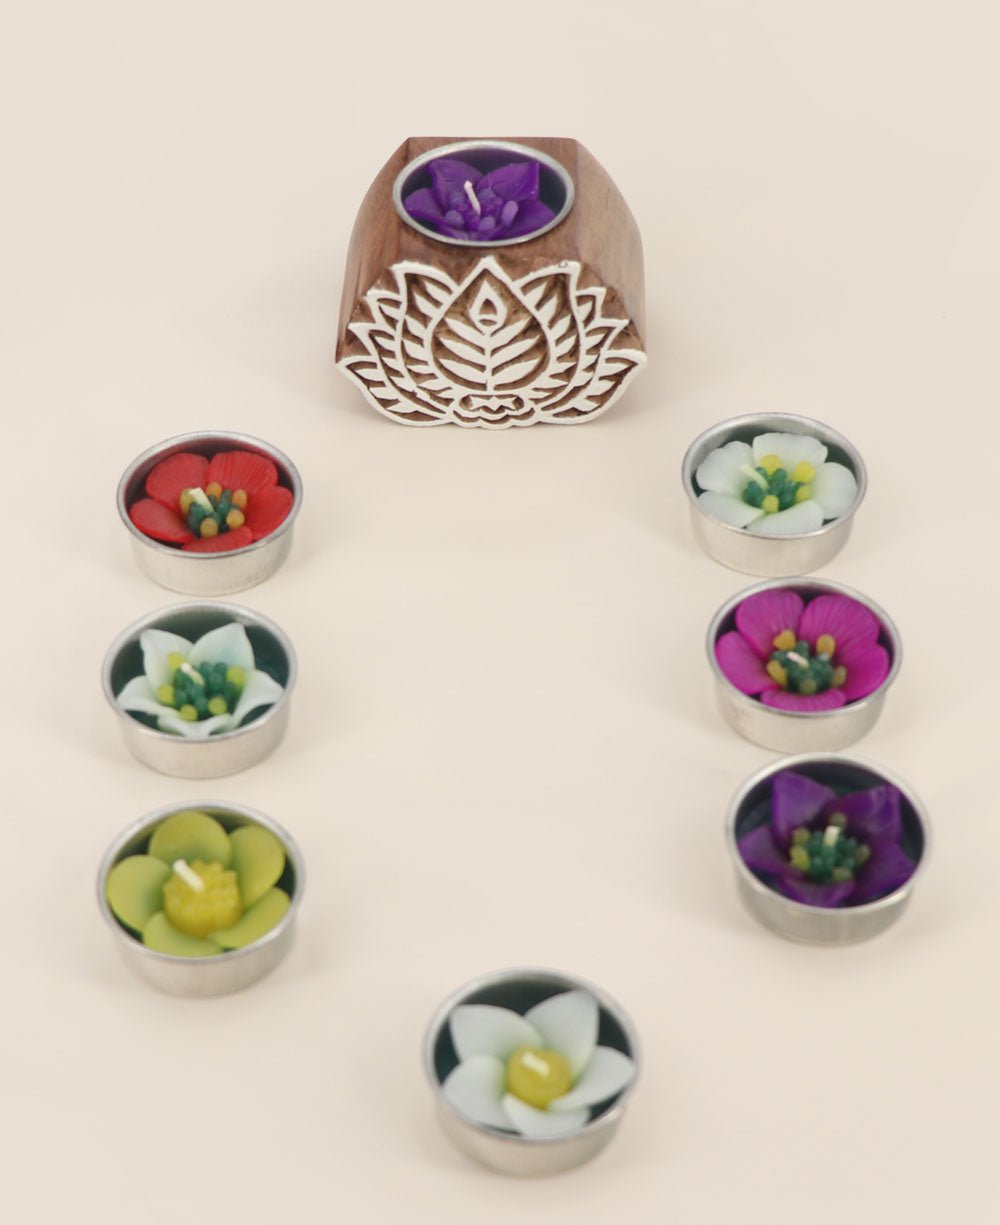 Lotus Tea light Holder With 8 Floral Tea lights - Candle Holders